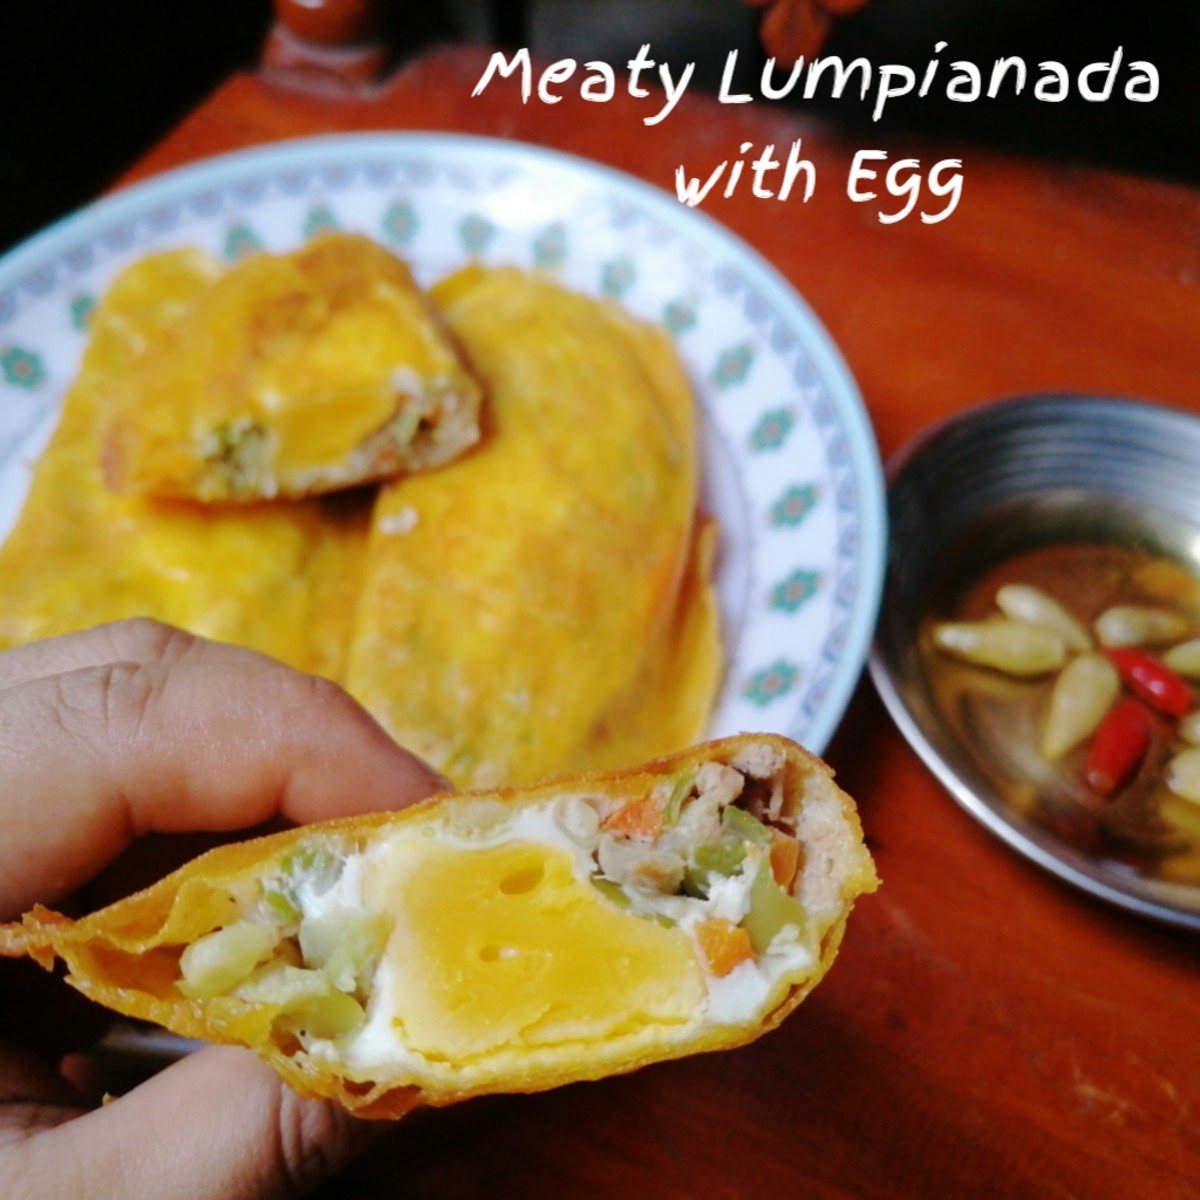 Meaty lumpianada with egg